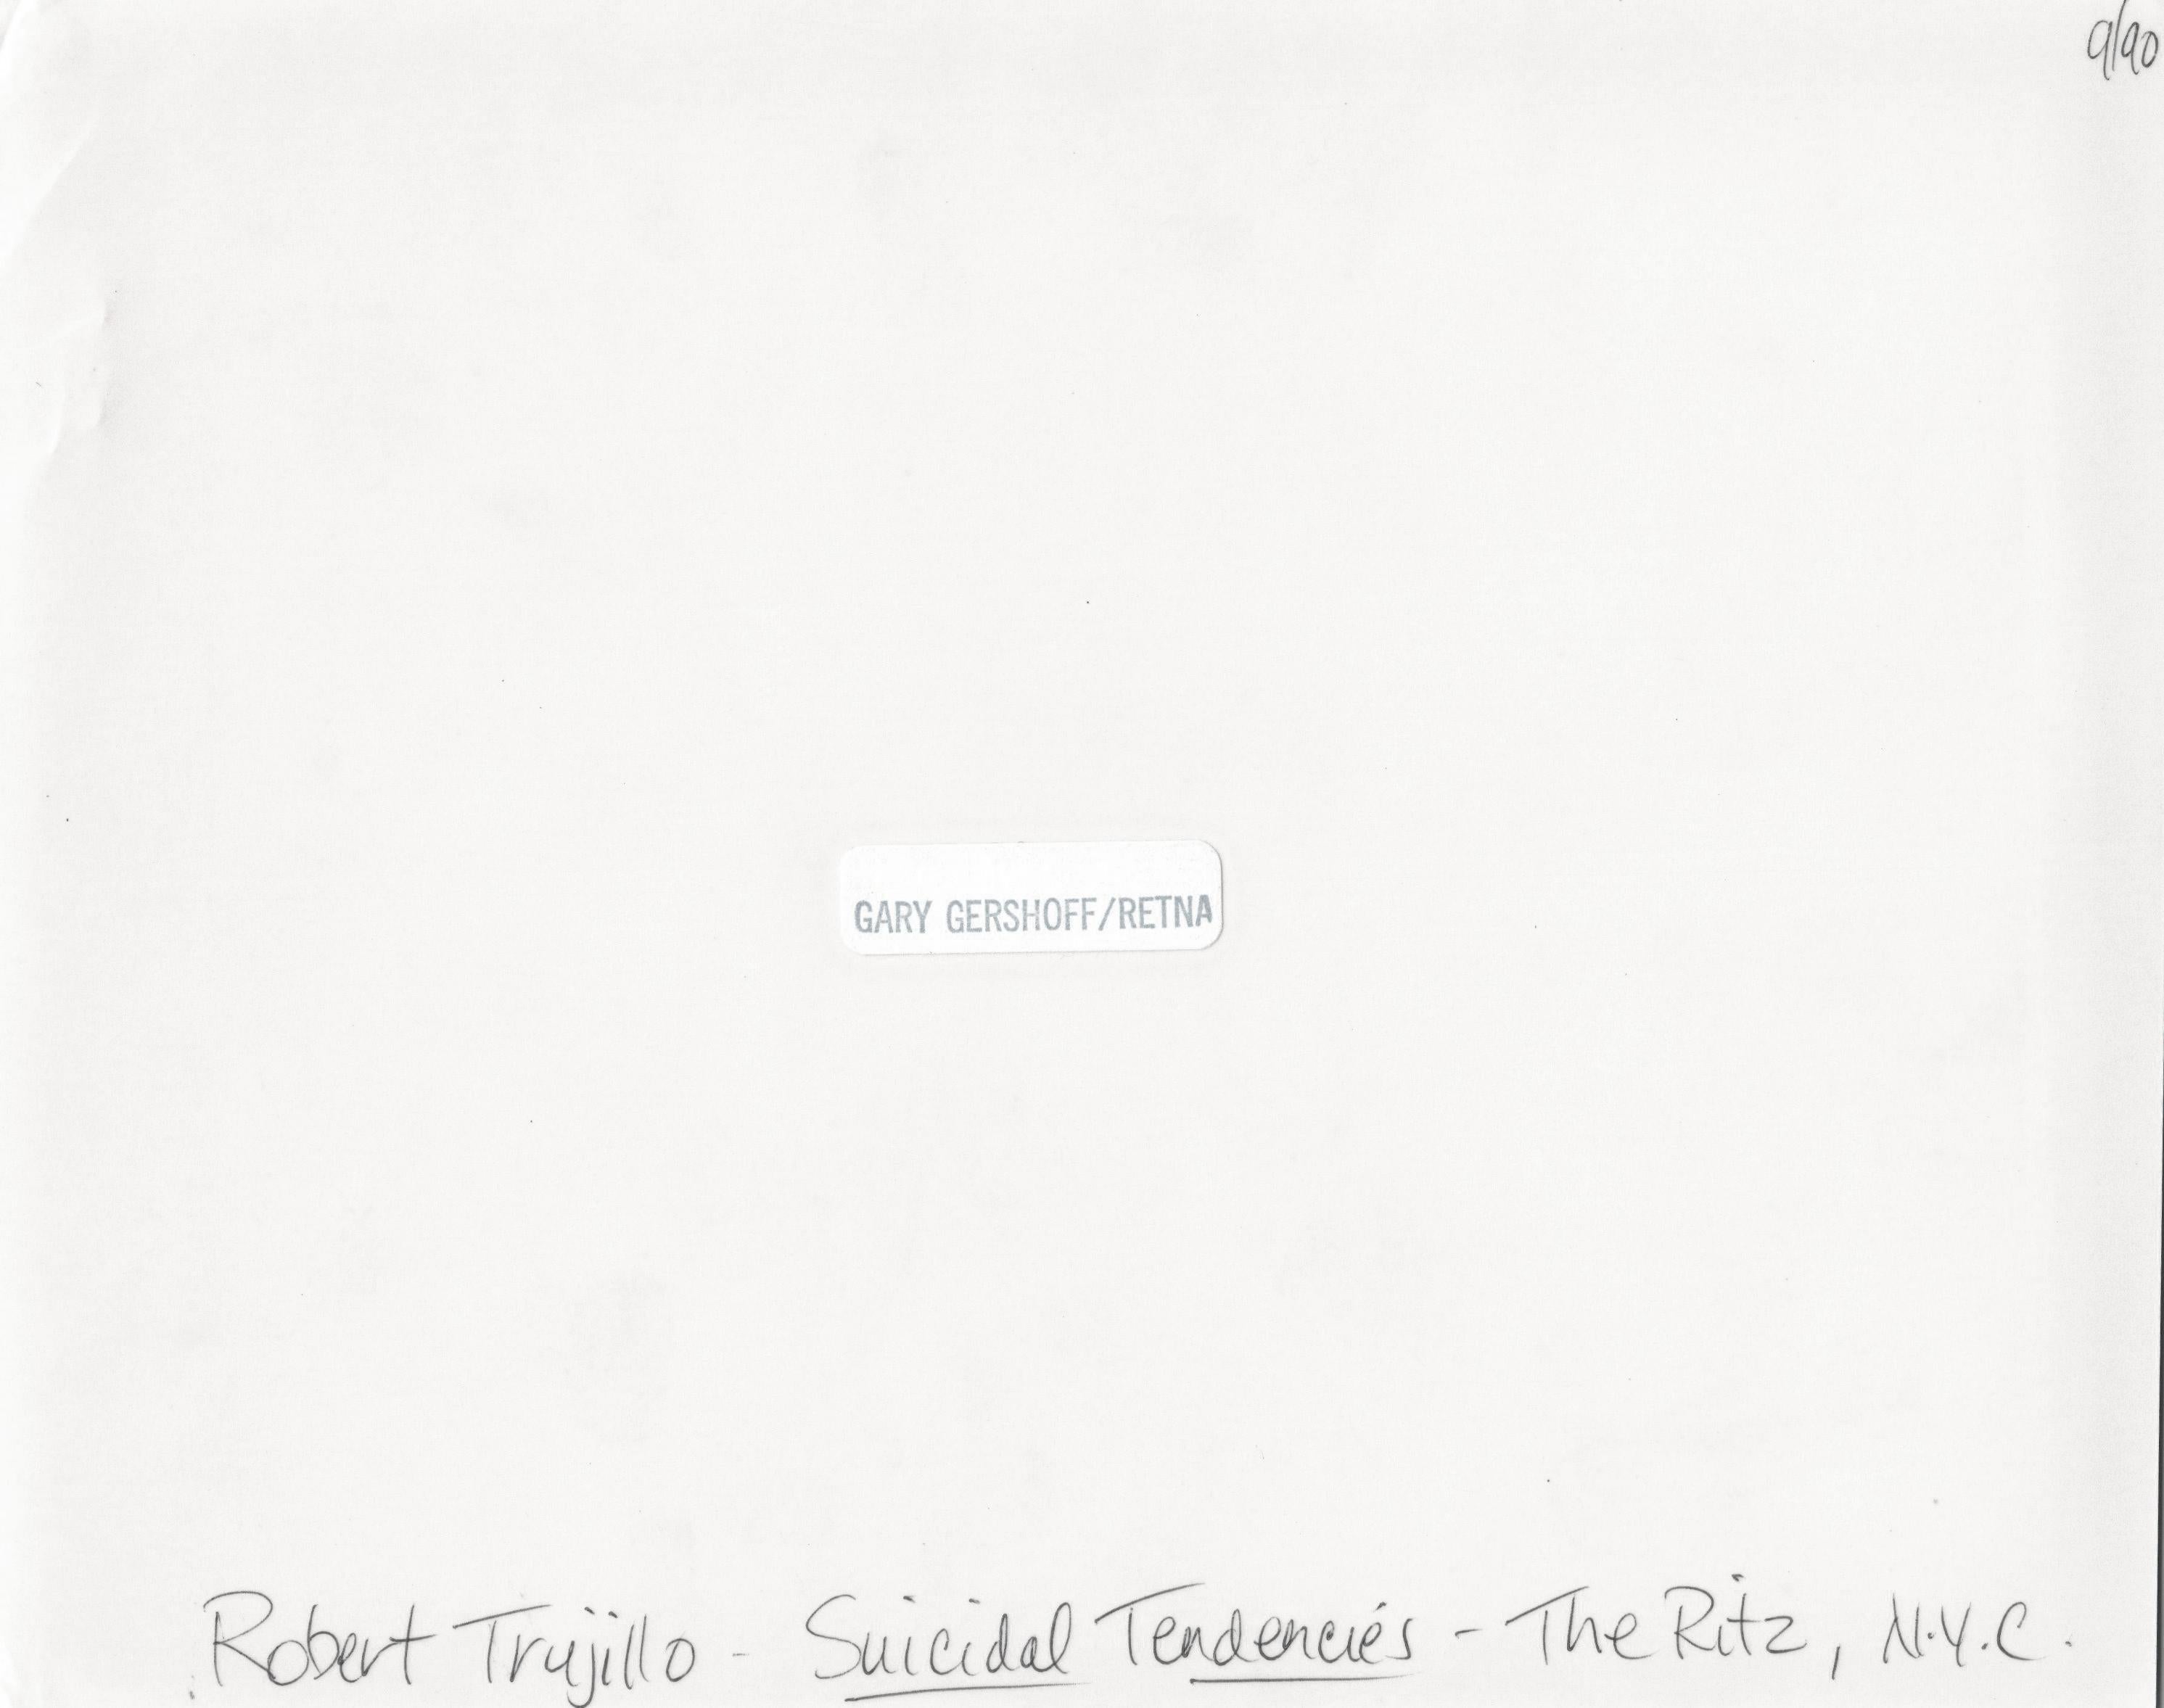 Robert Trujillo of Suicidal Tendencies at The Ritz Vintage Original Photograph - Black Black and White Photograph by Gary Gershoff